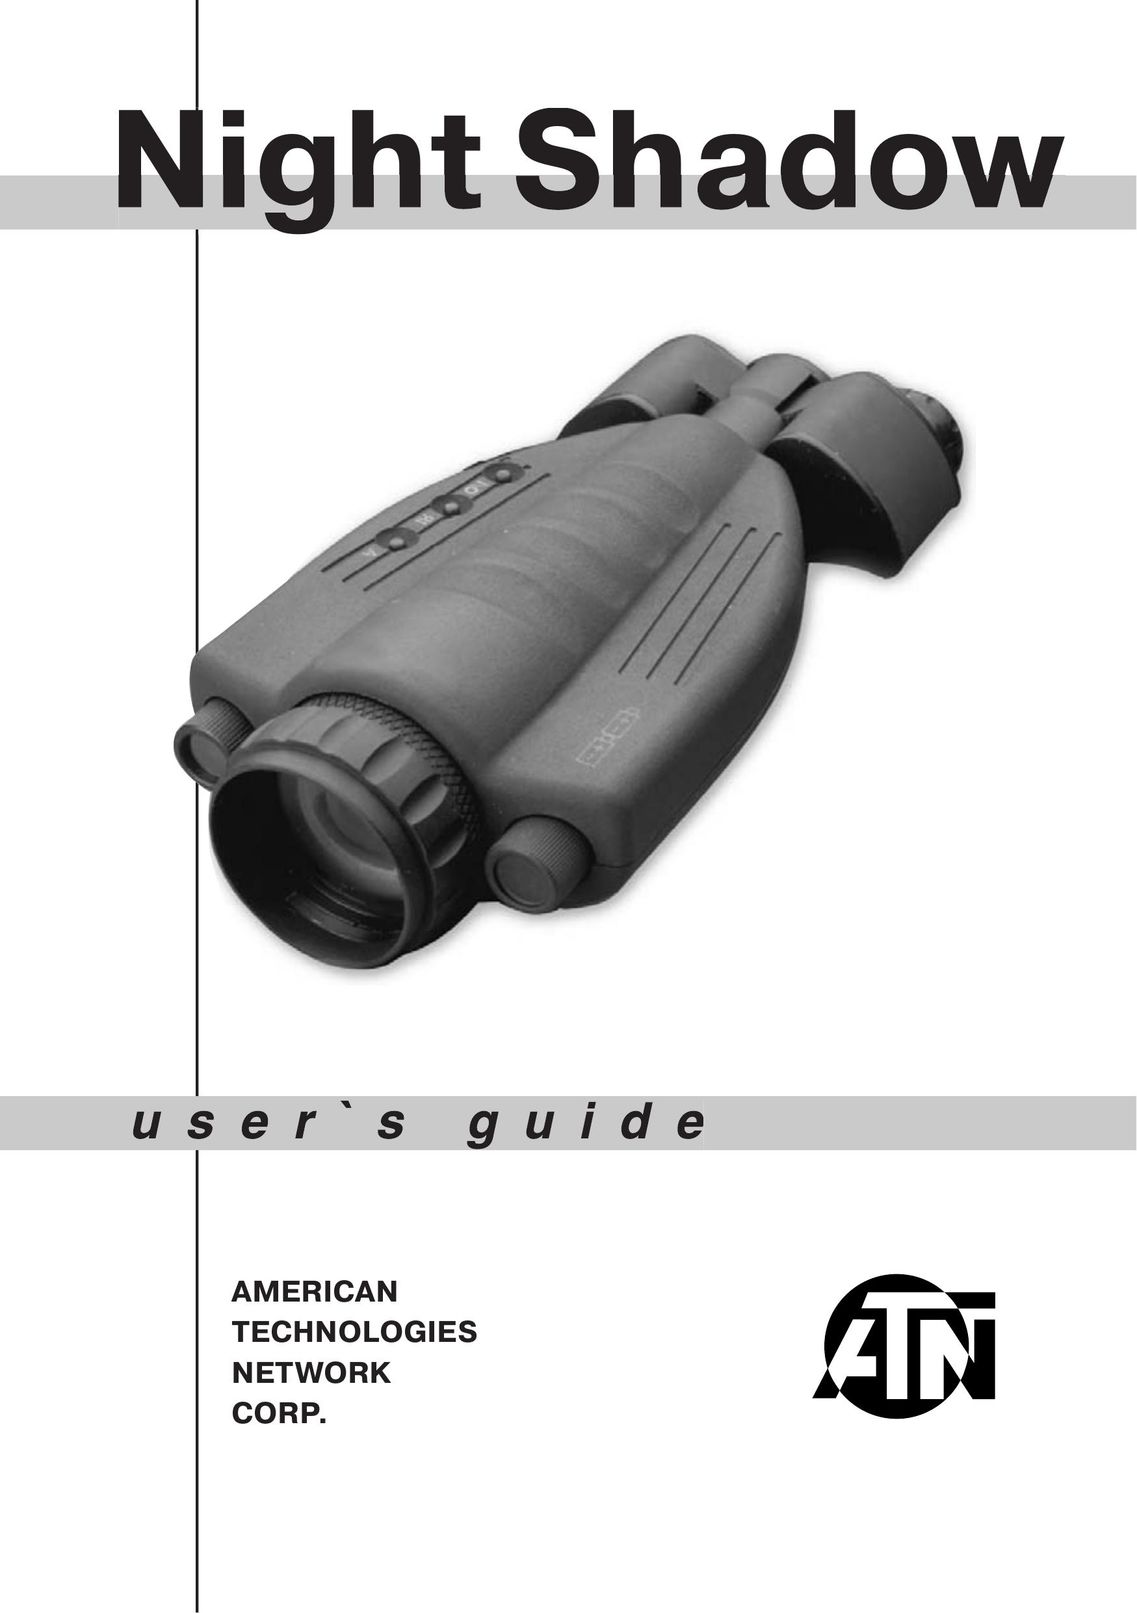 ATN Night Vision Biocular Binoculars User Manual